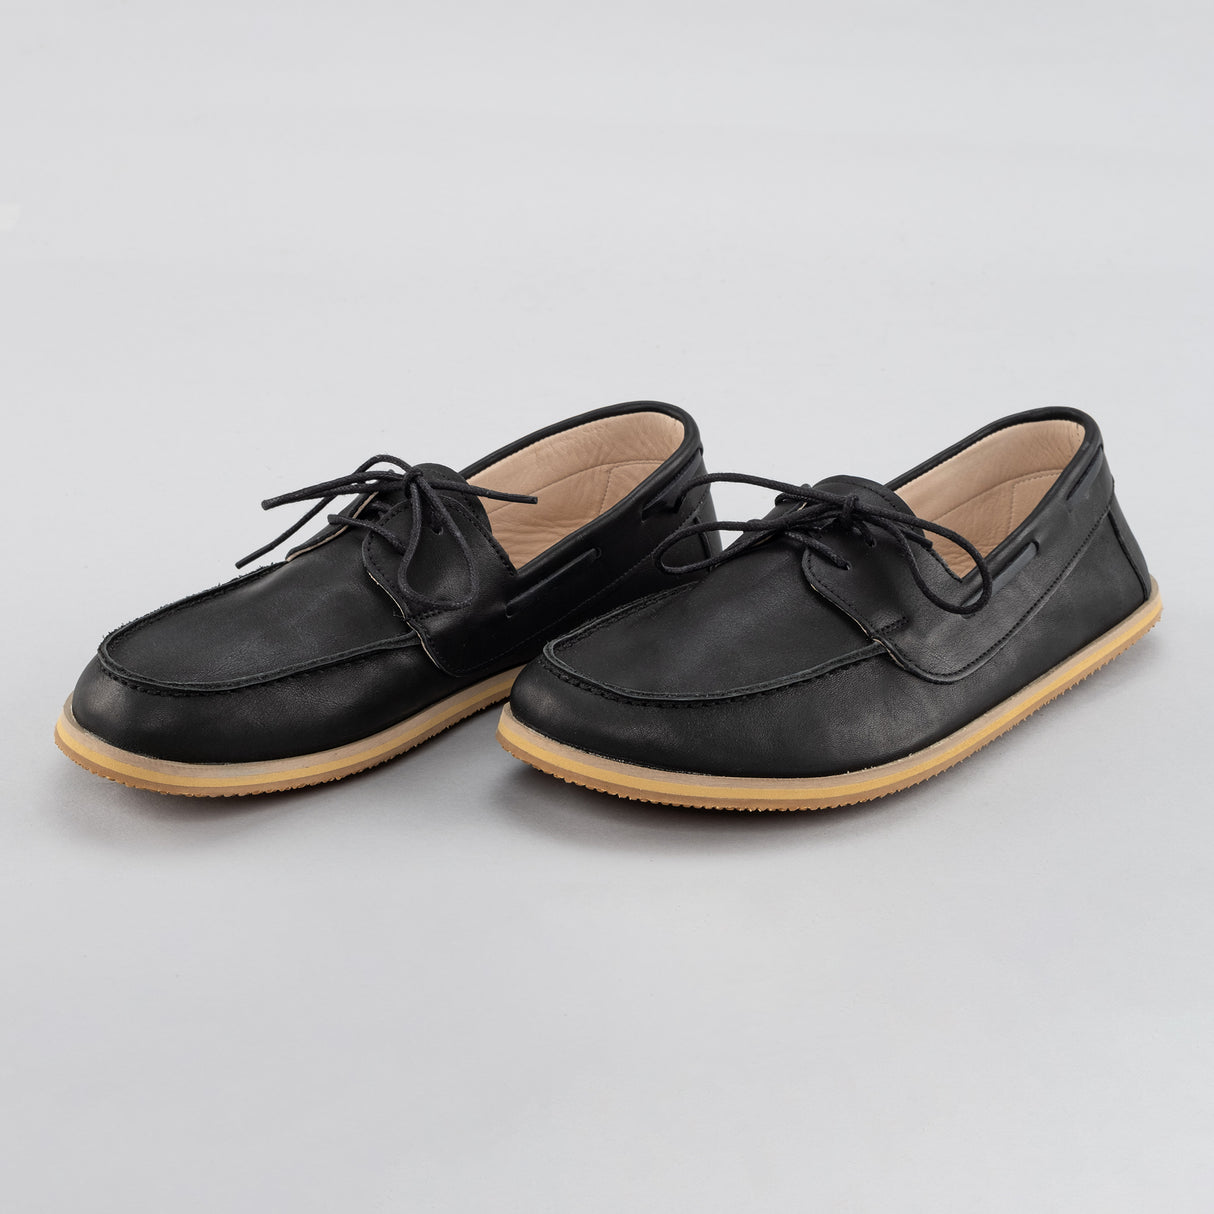 Women's Black Boat Shoes